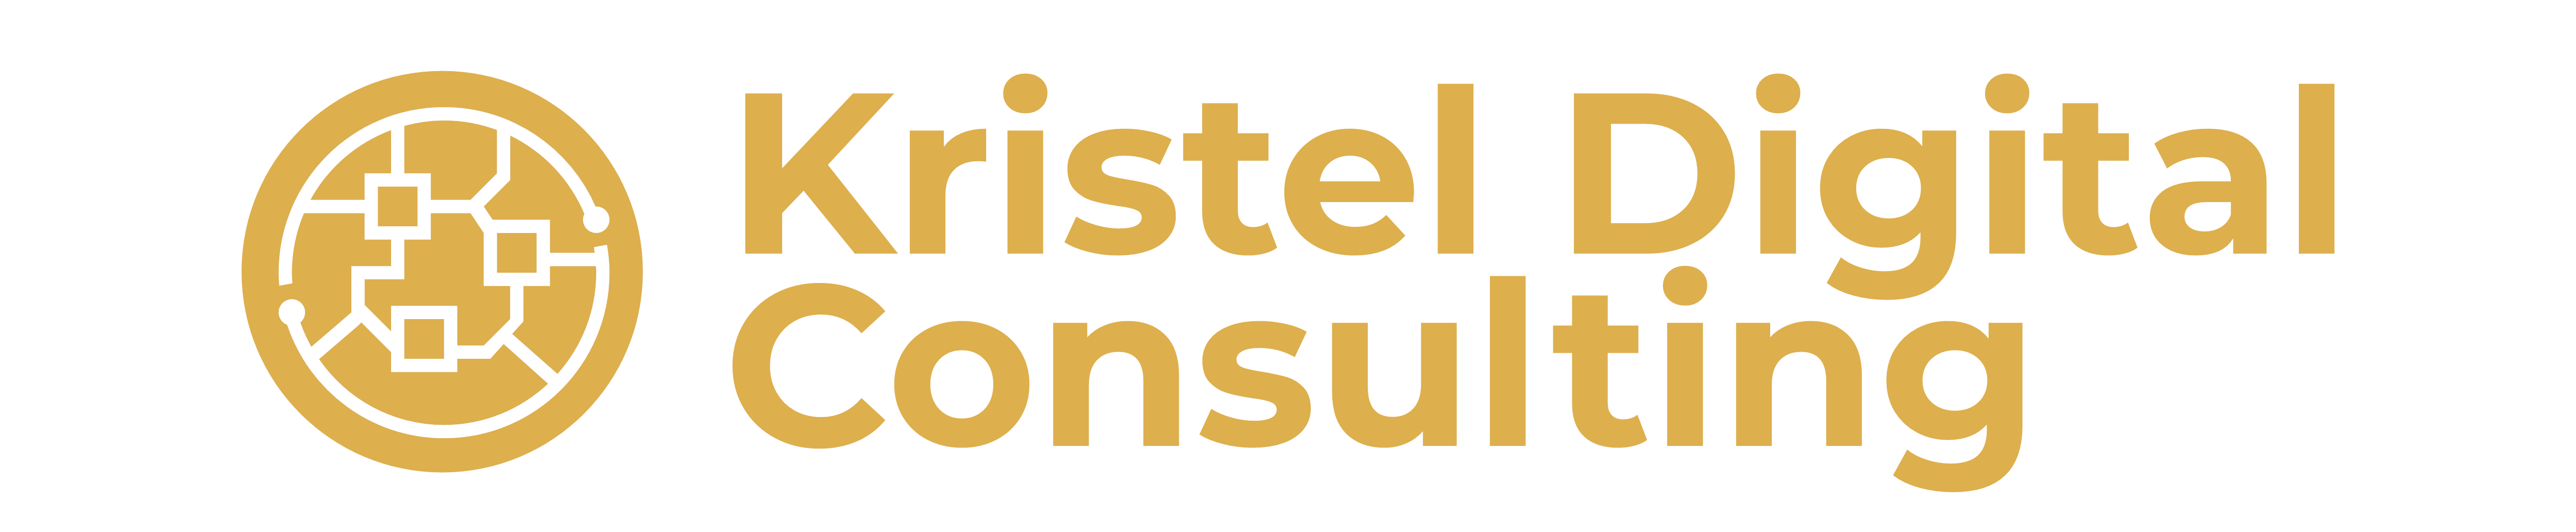 Kristel Digital Consulting